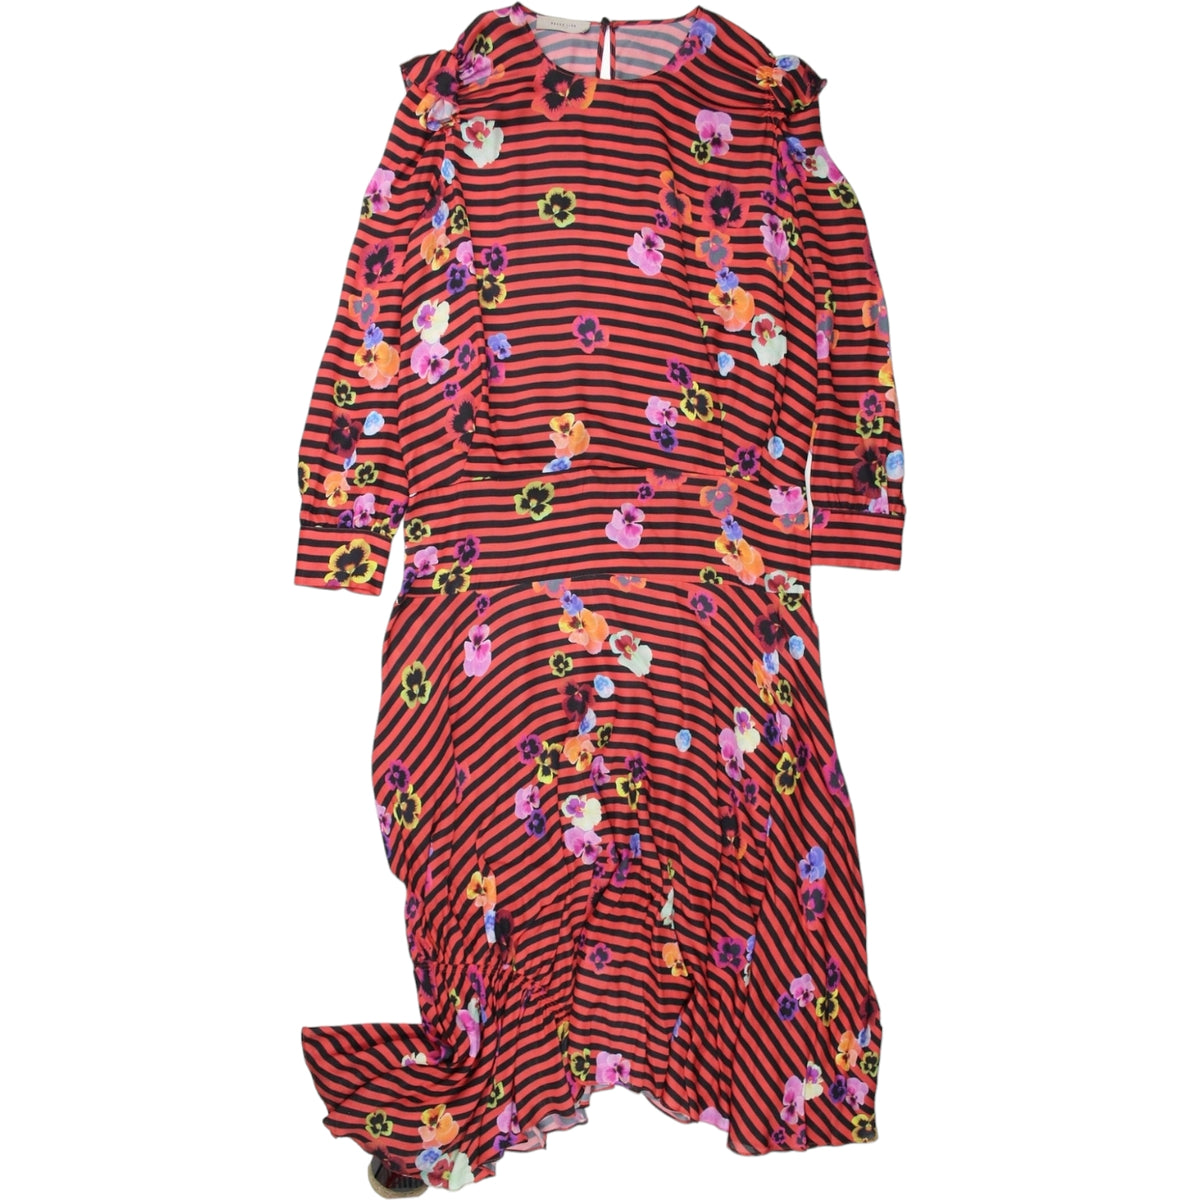 Preen Line Red/Black Stripe/Floral Maxi Dress